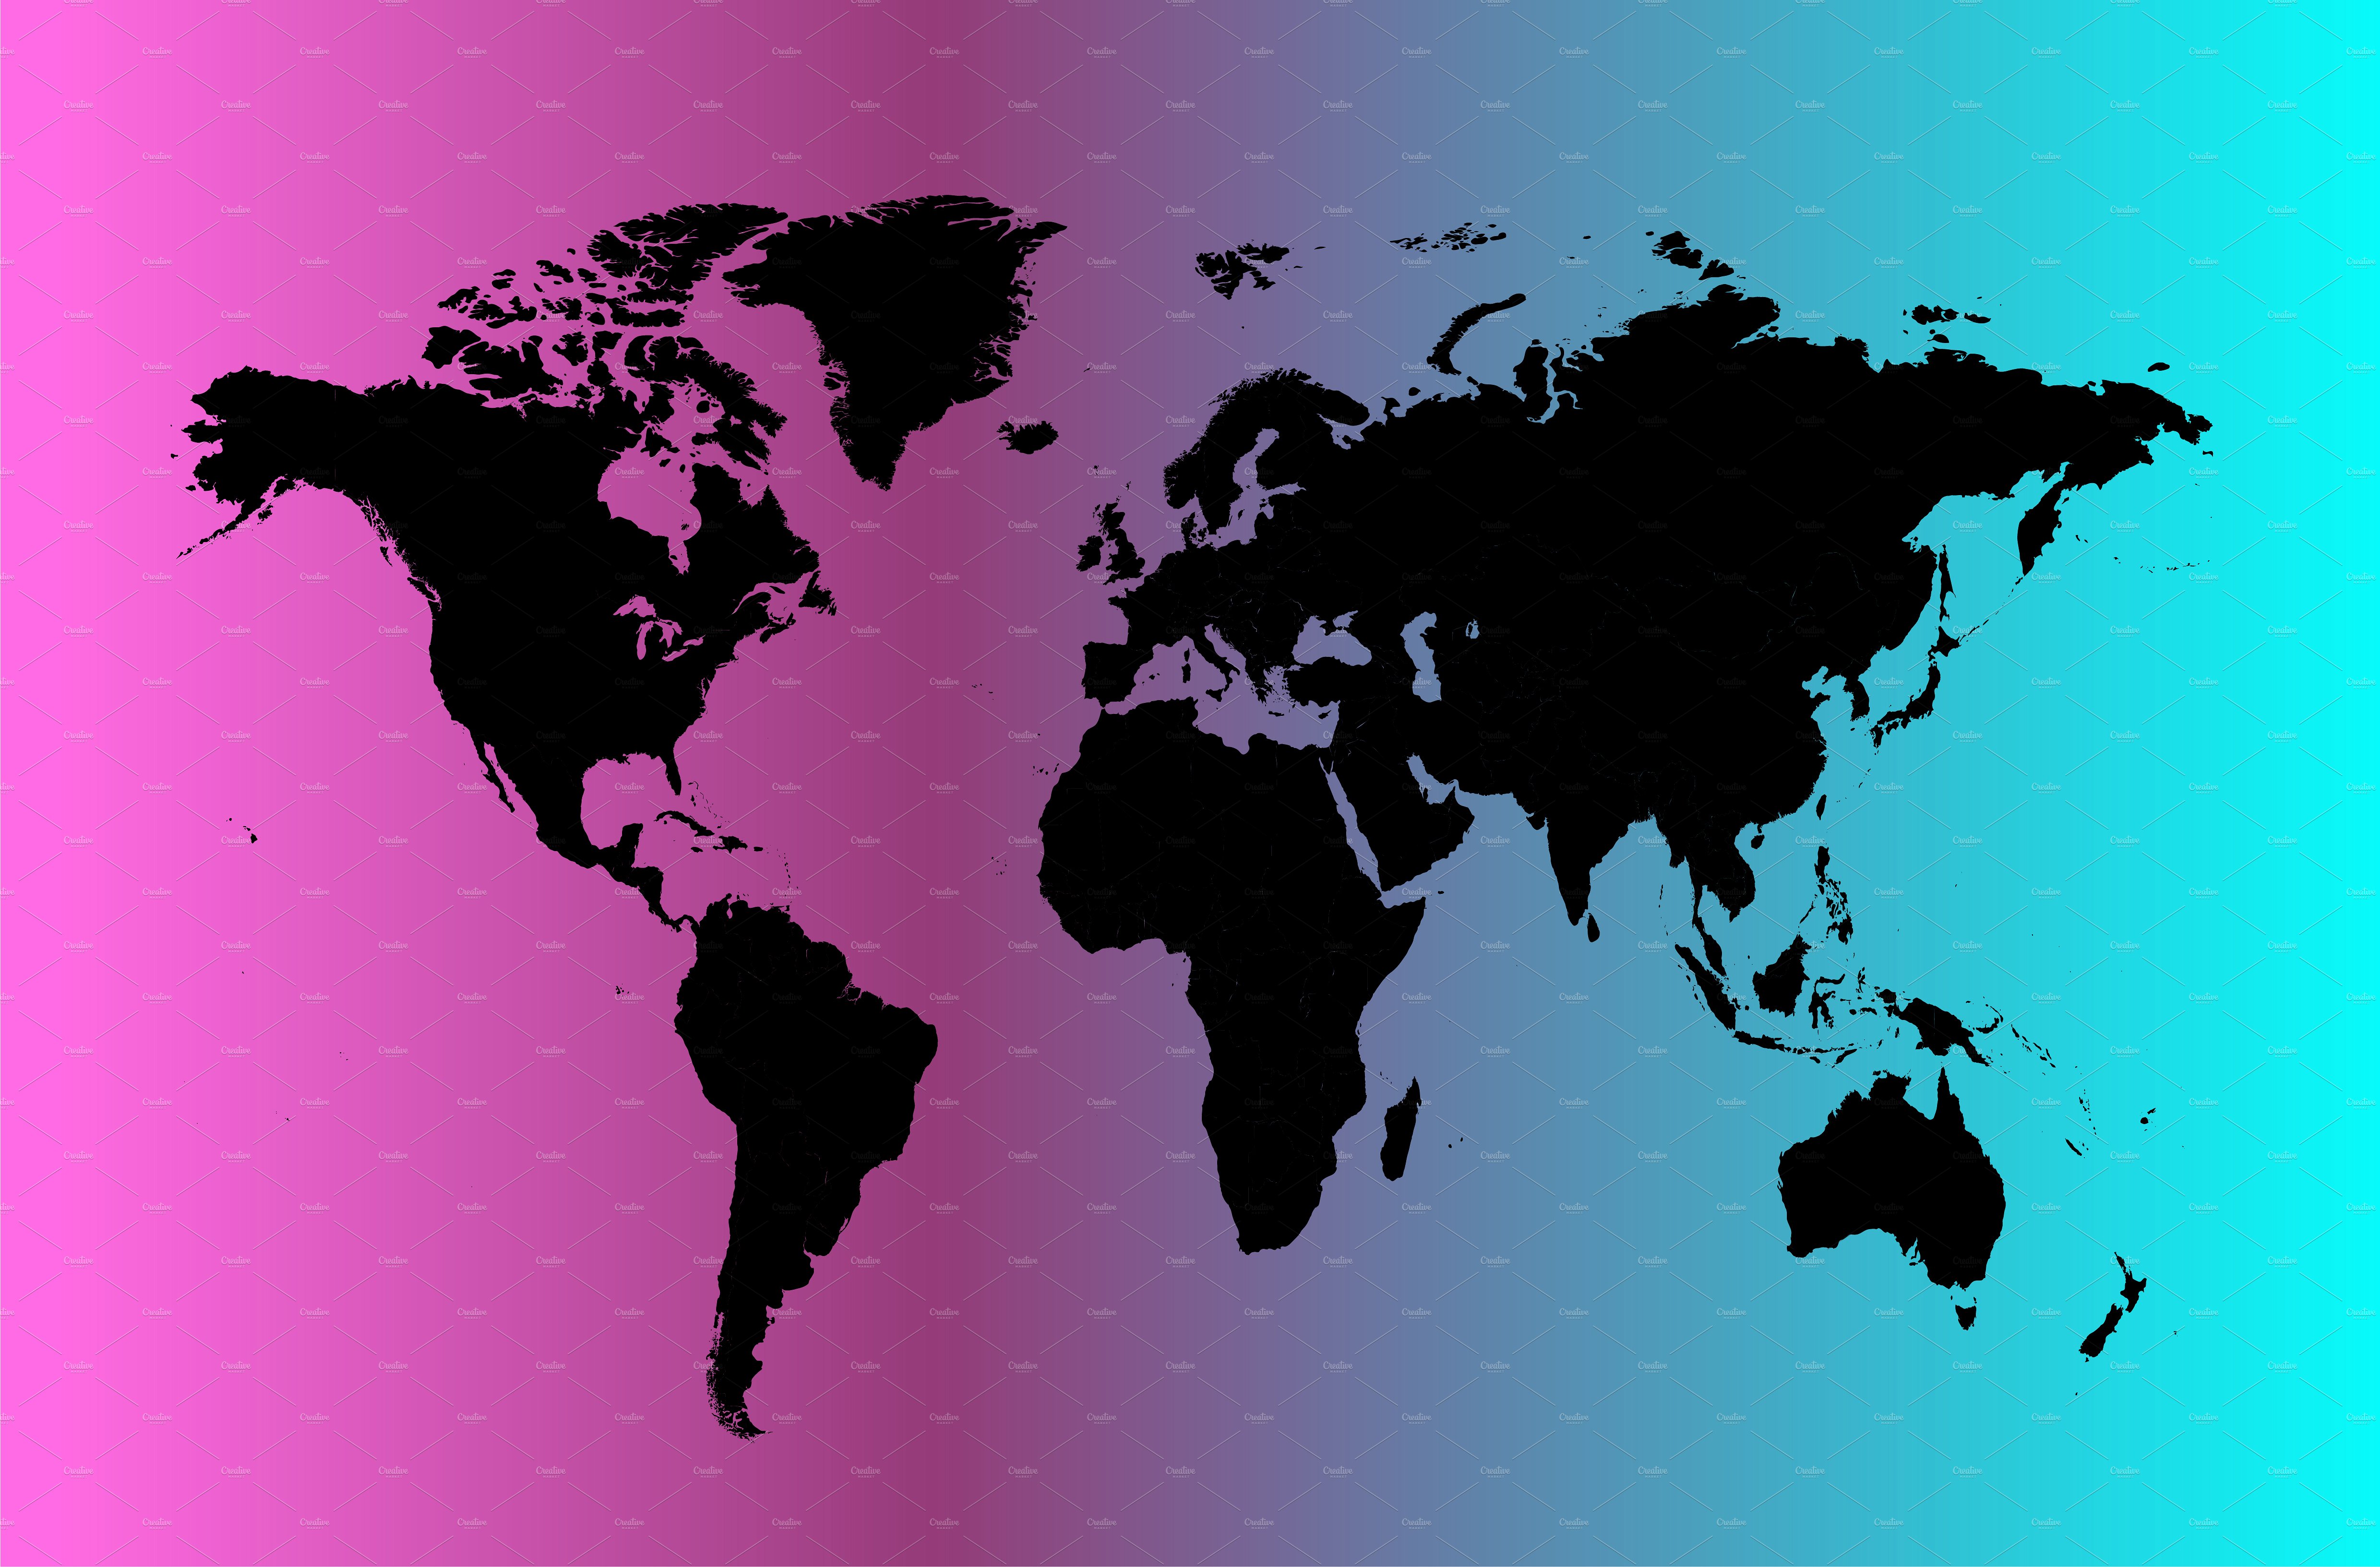 world map neon light ~ Web Elements ~ Creative Market